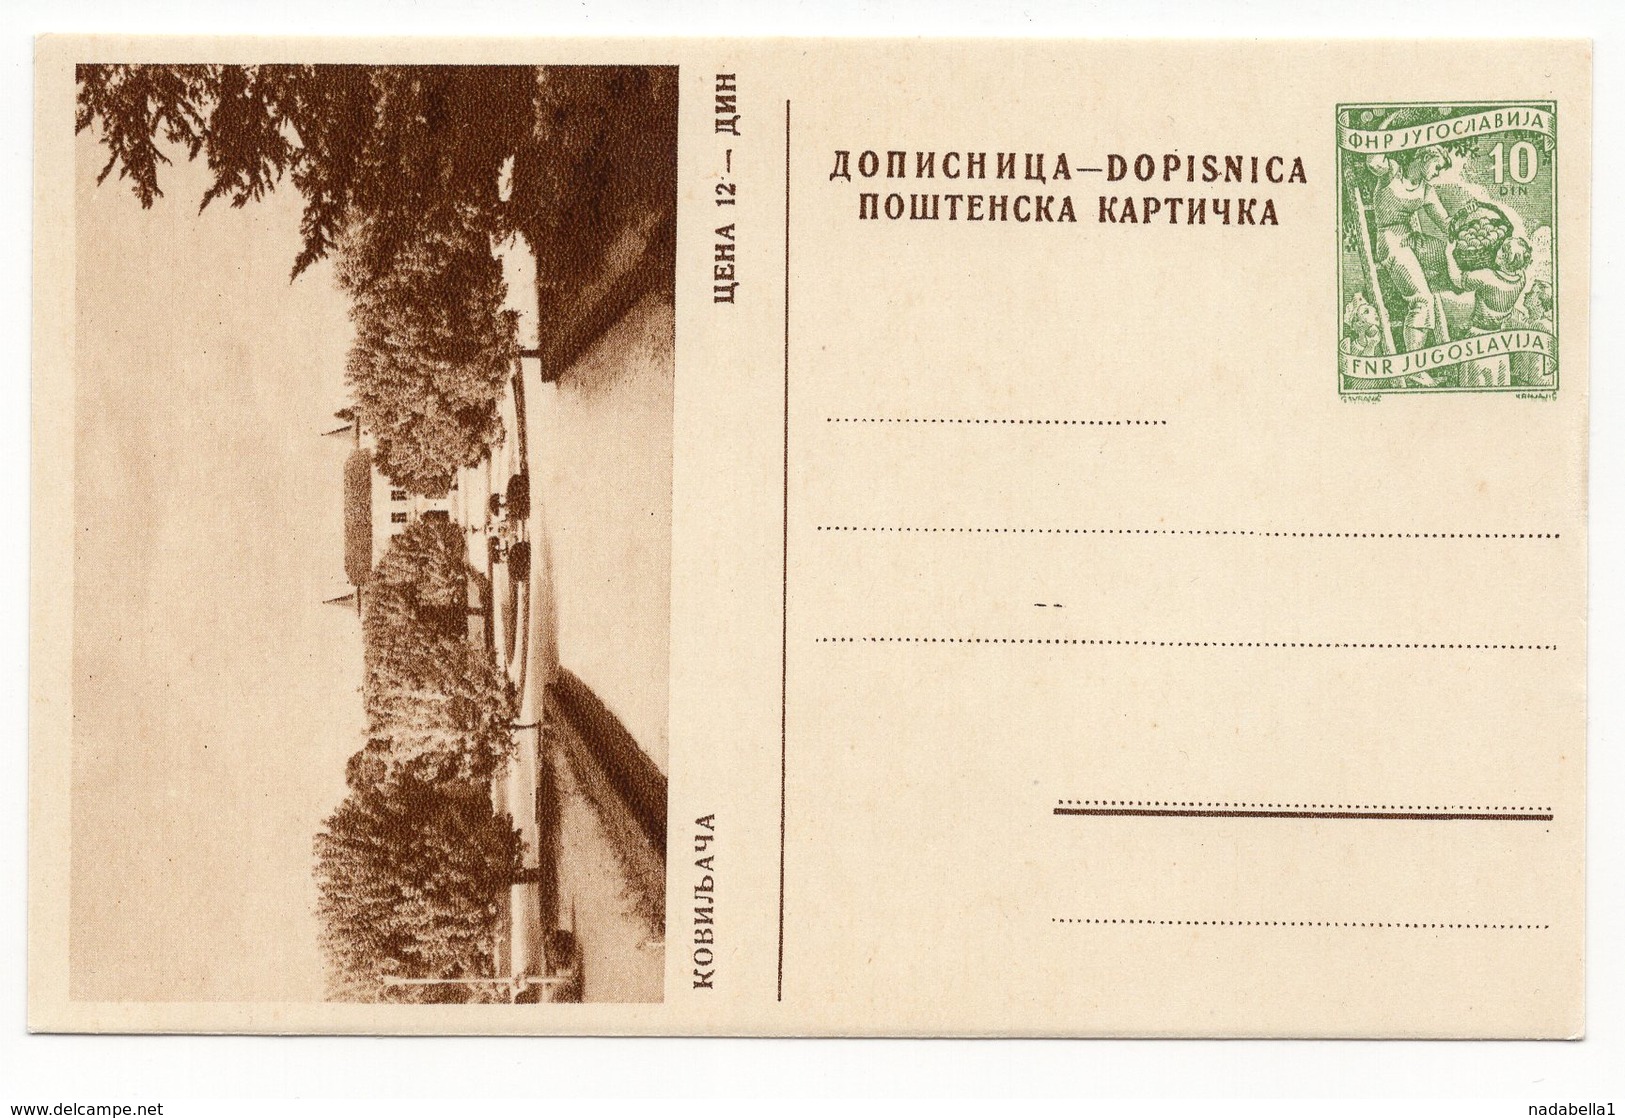 1956,YUGOSLAVIA, BANJA KOVILJACA, SPA, SERBIA, 10 DINARA GREEN, ILLUSTRATED STATIONERY CARD, MINT - Postal Stationery